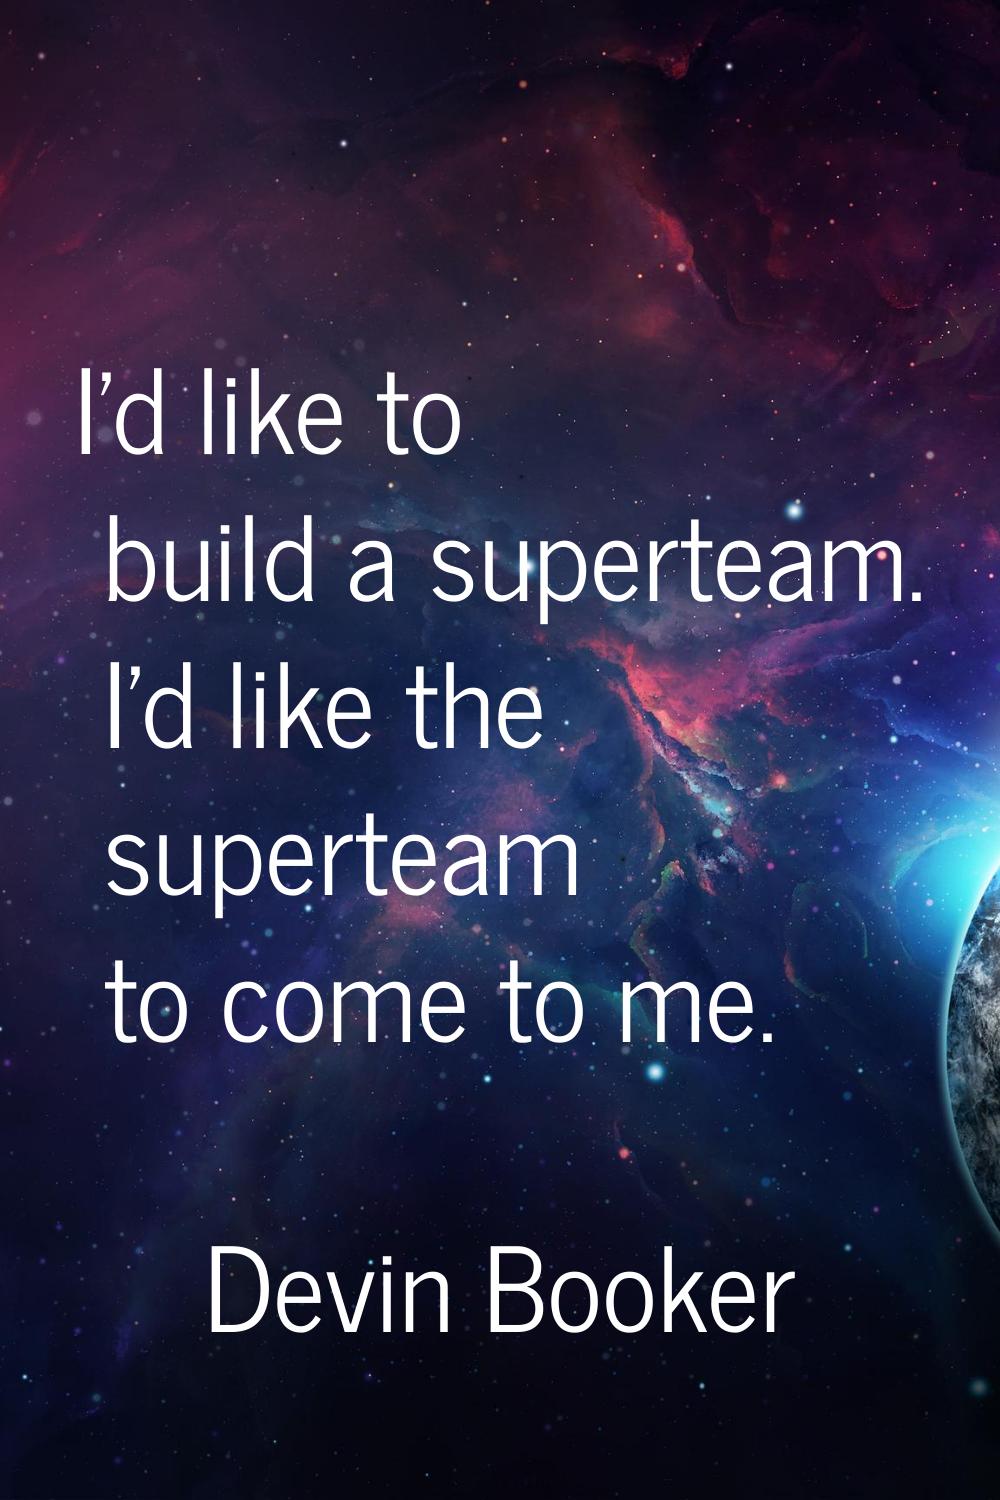 I'd like to build a superteam. I'd like the superteam to come to me.